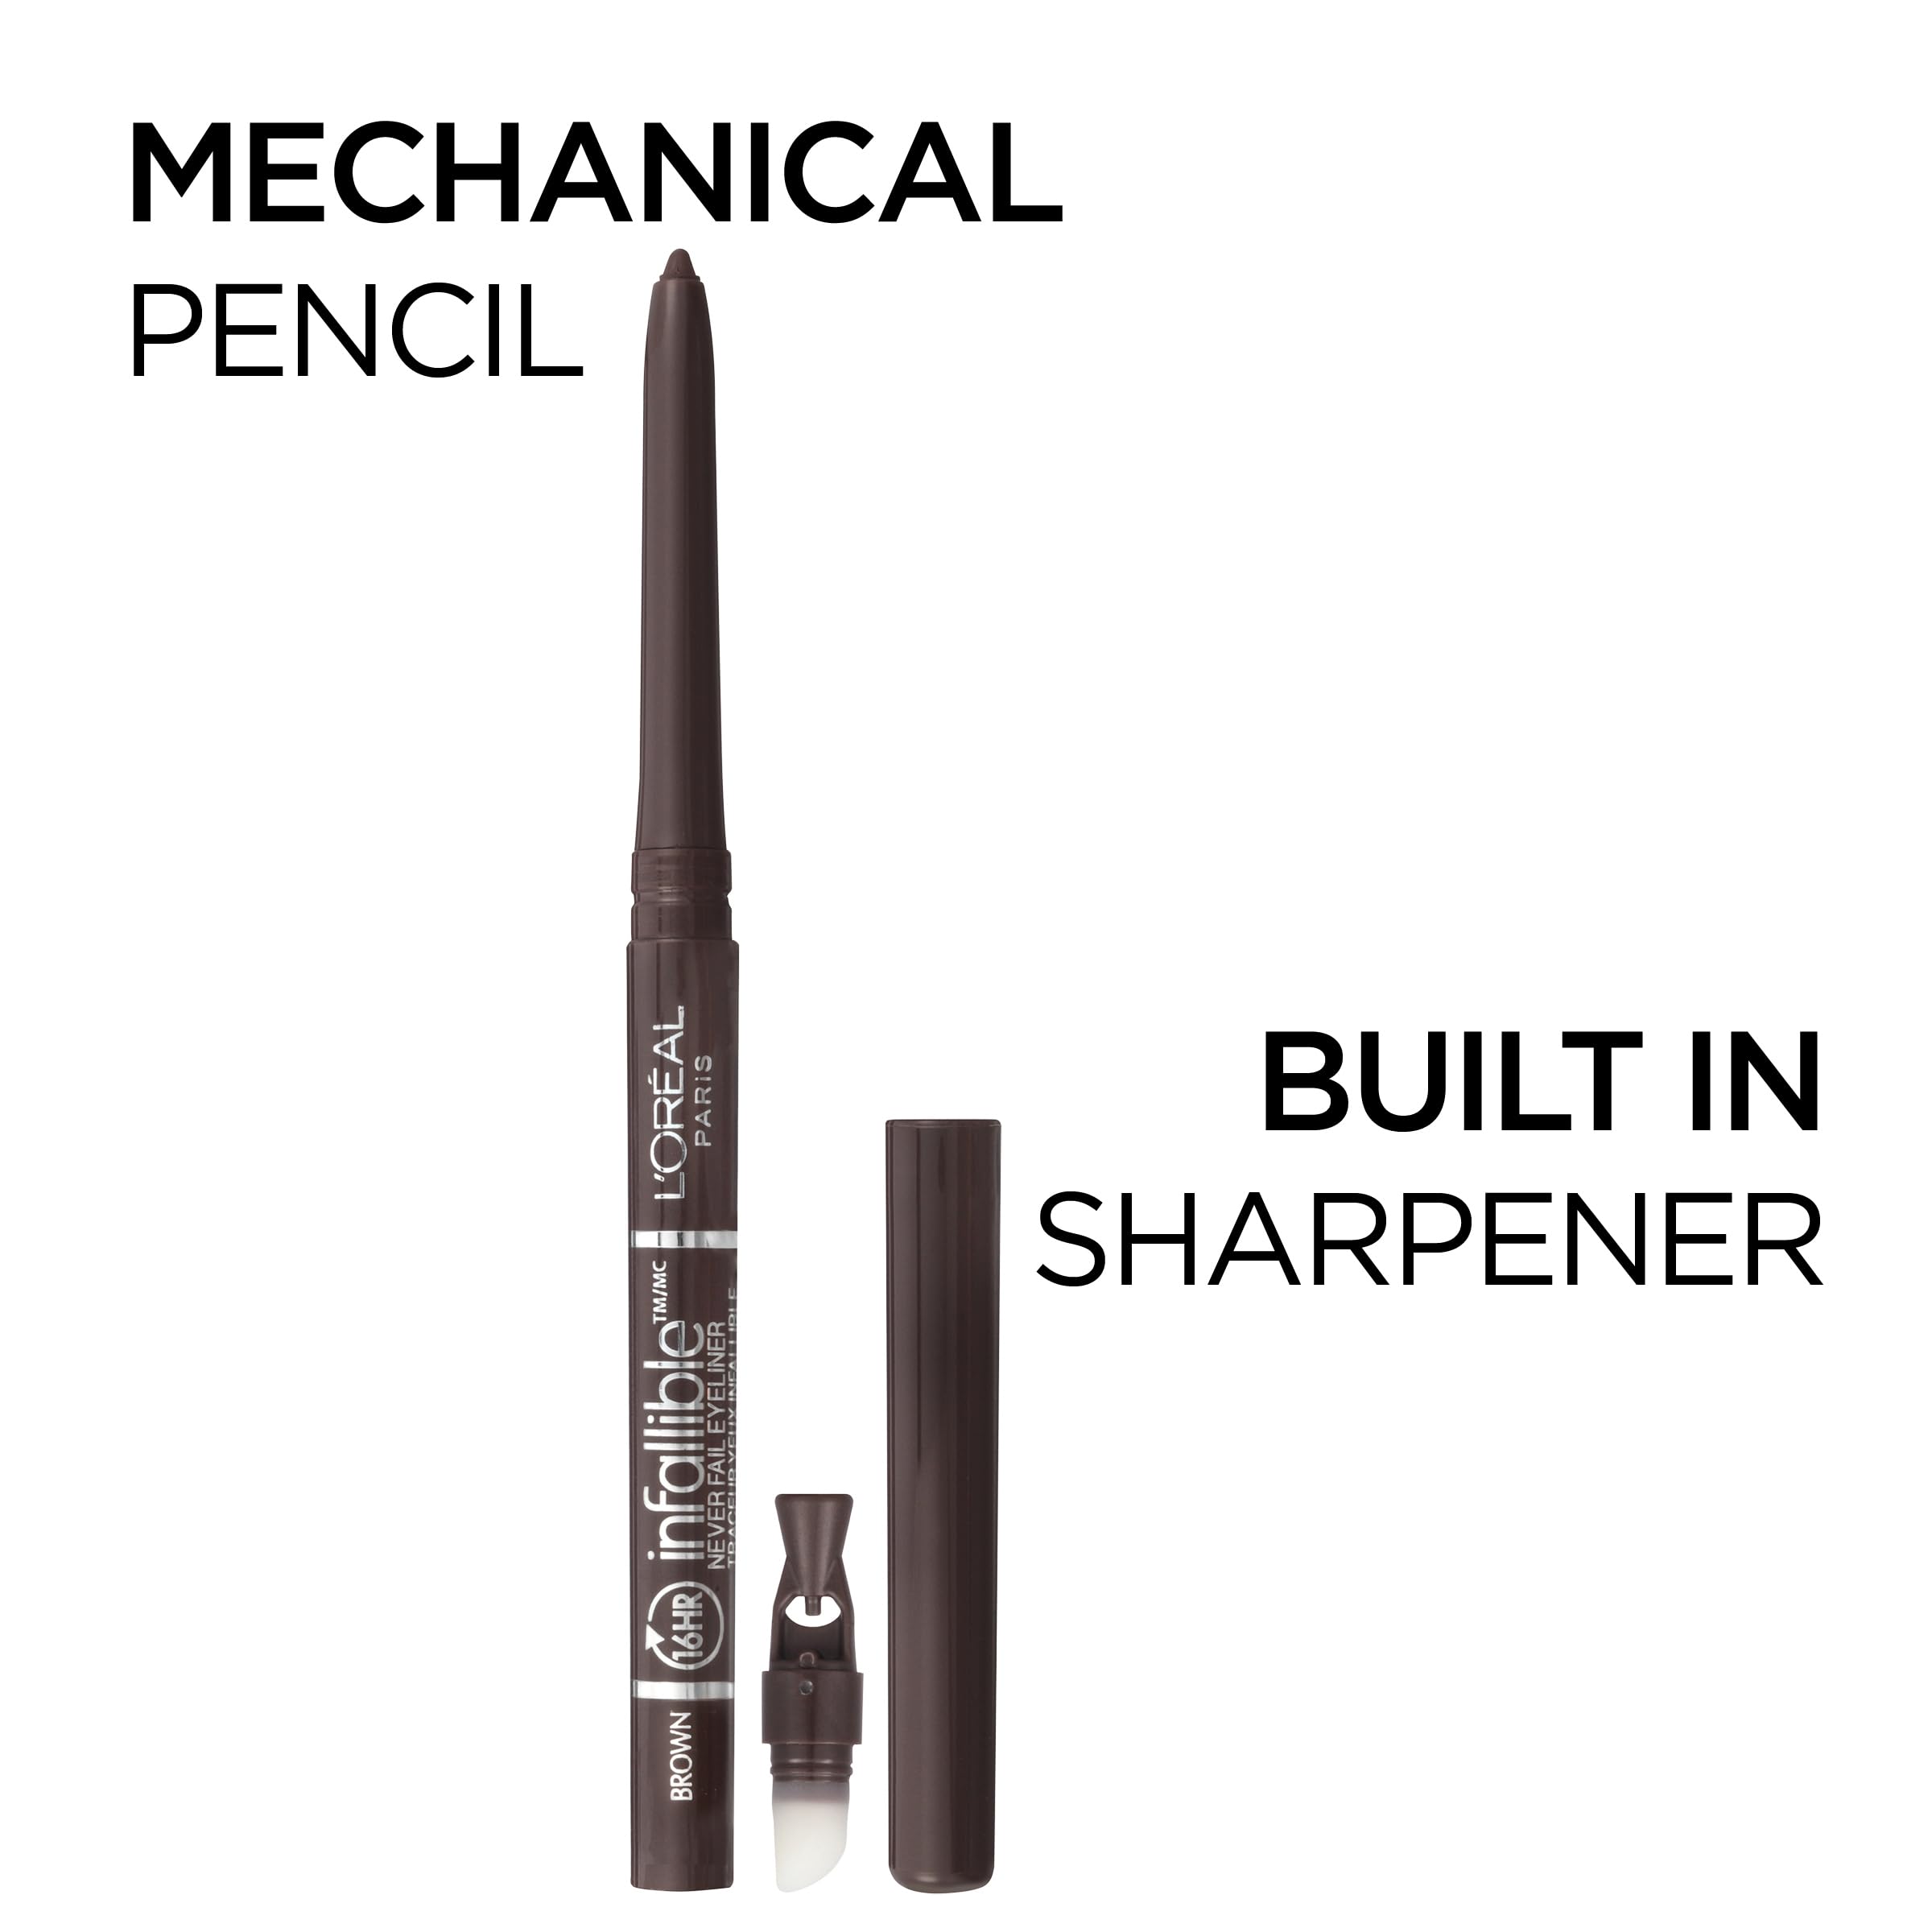 L'Oreal Paris Makeup Infallible Never Fail Original Mechanical Pencil Eyeliner with Built in Sharpener, Black Brown, 1 Count